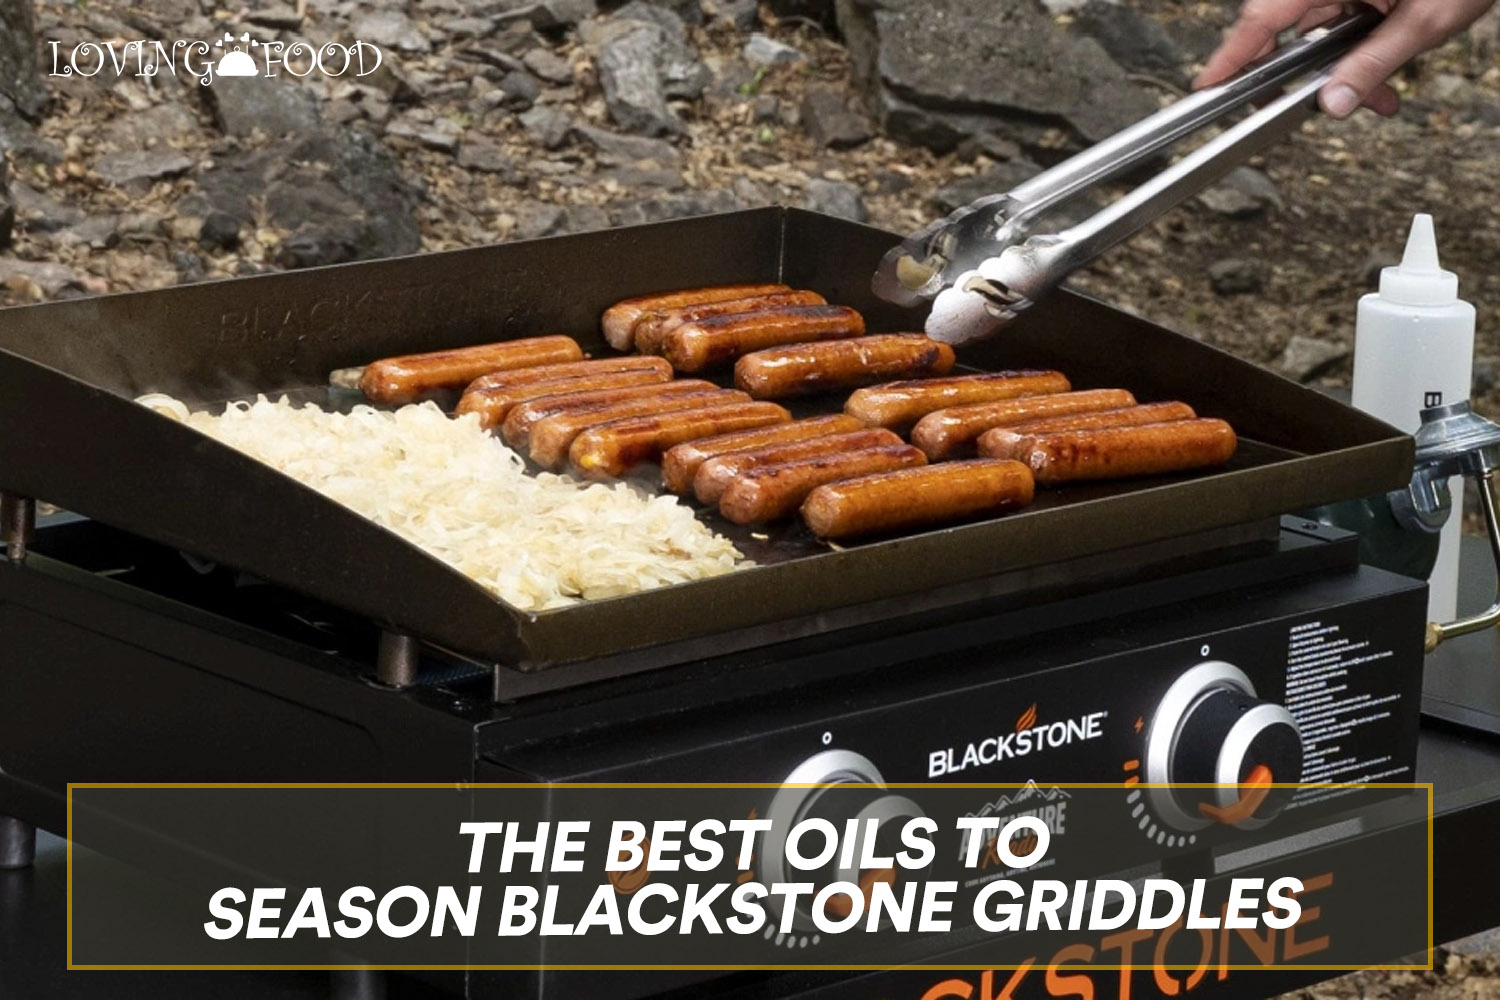 Can You Use Avocado Oil to Season a Blackstone Griddle?